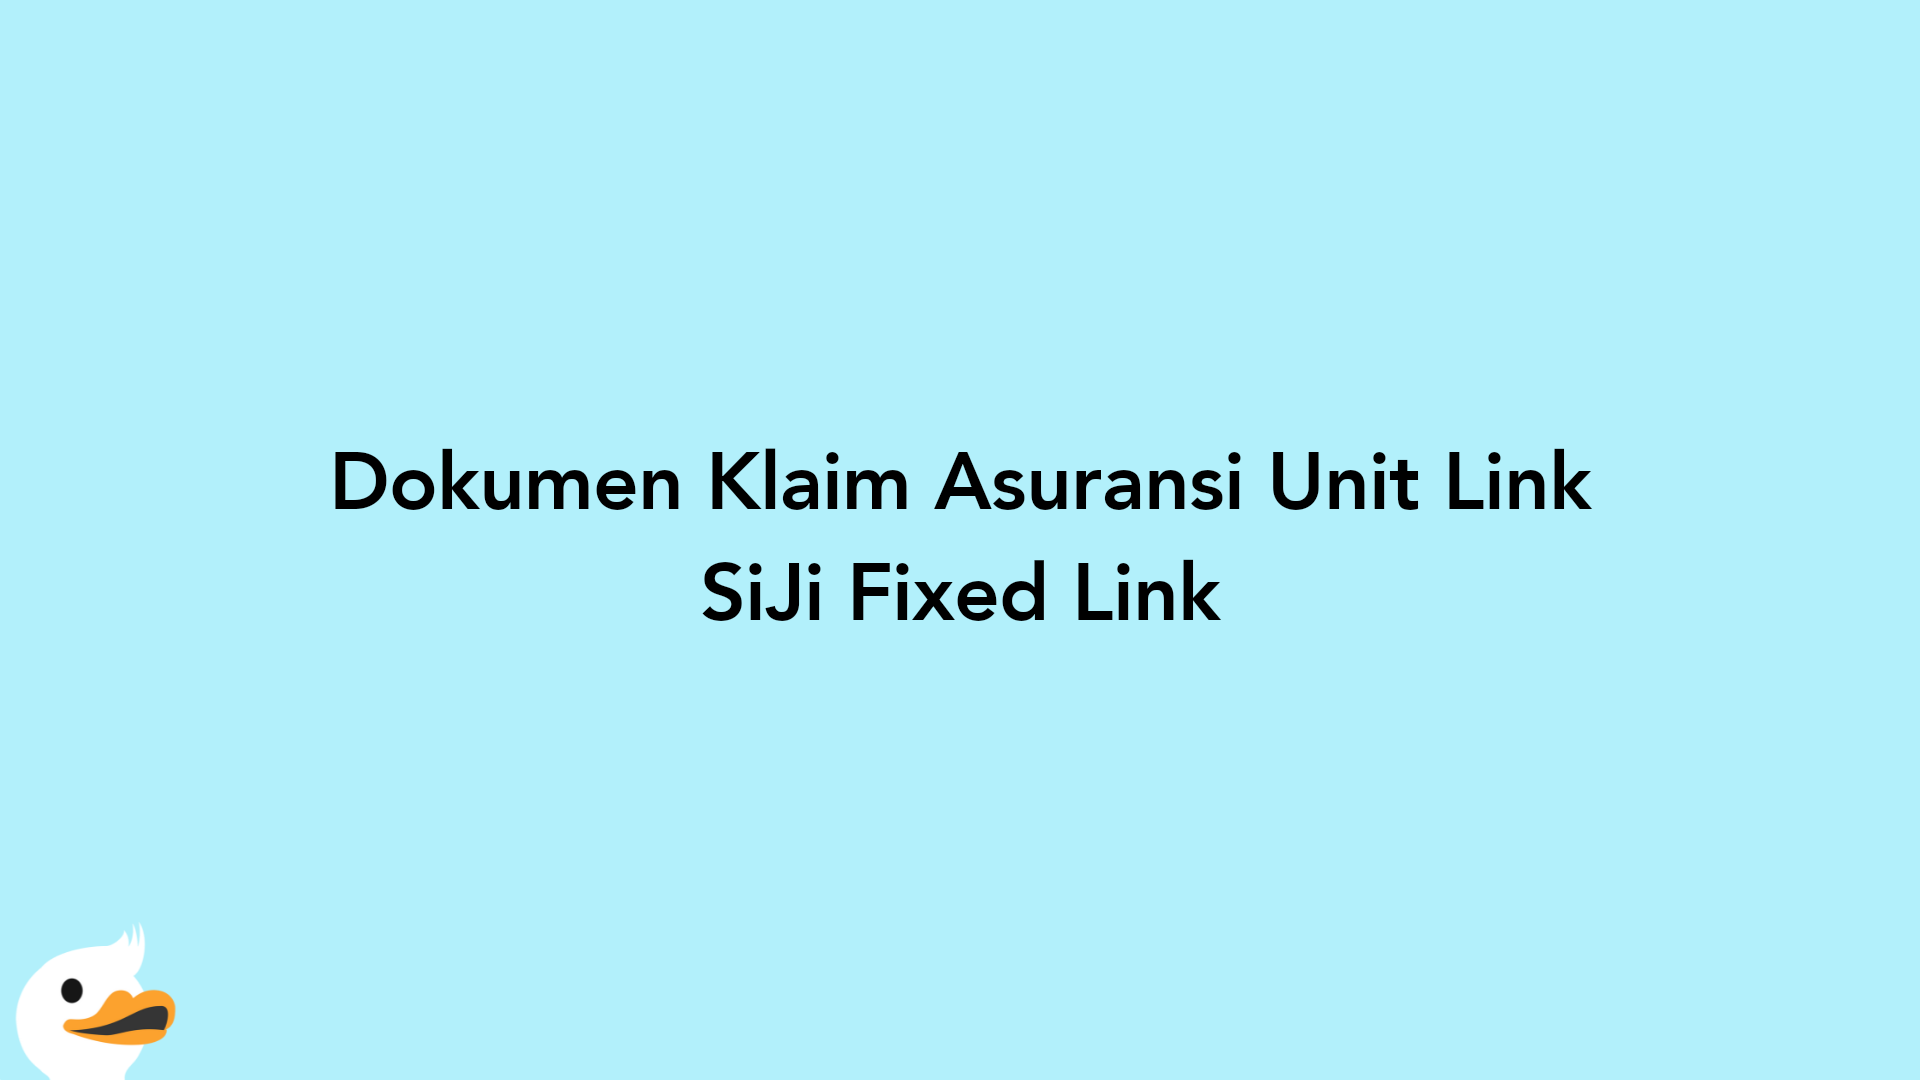 Dokumen Klaim Asuransi Unit Link SiJi Fixed Link